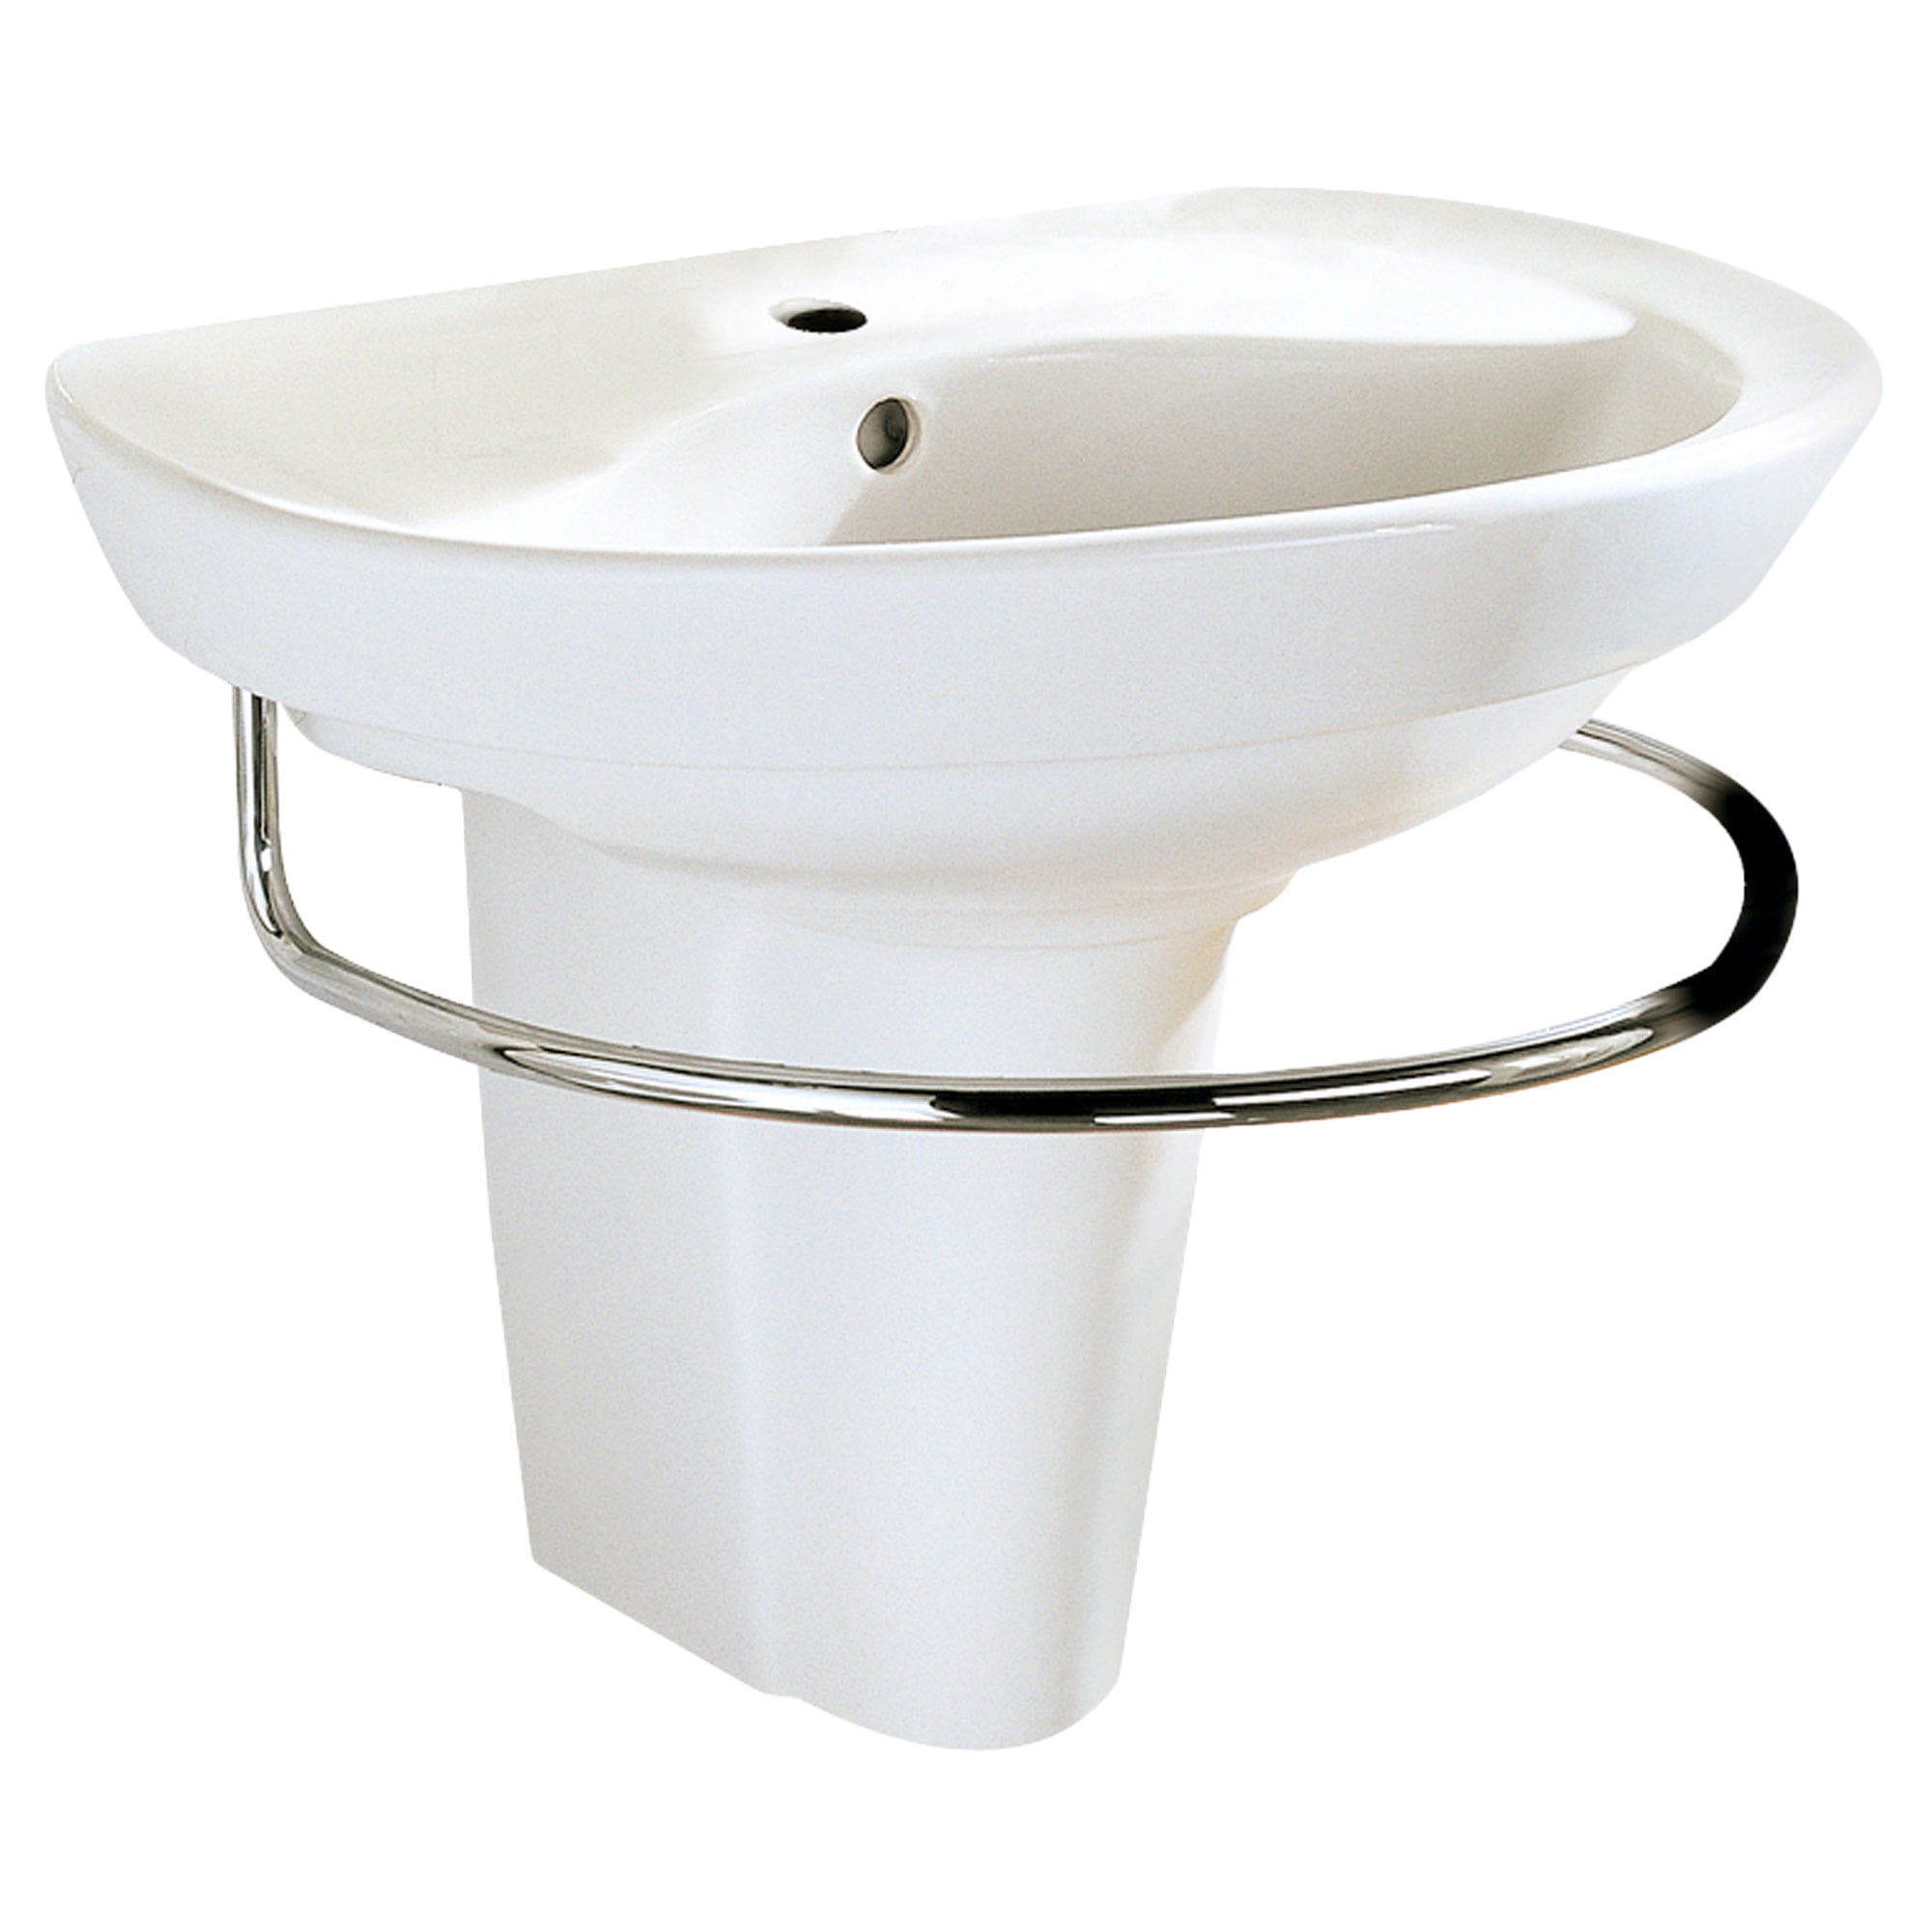 Ravenna® Center Hole Only Wall-Hung Sink and Semi-Pedestal Leg Combination